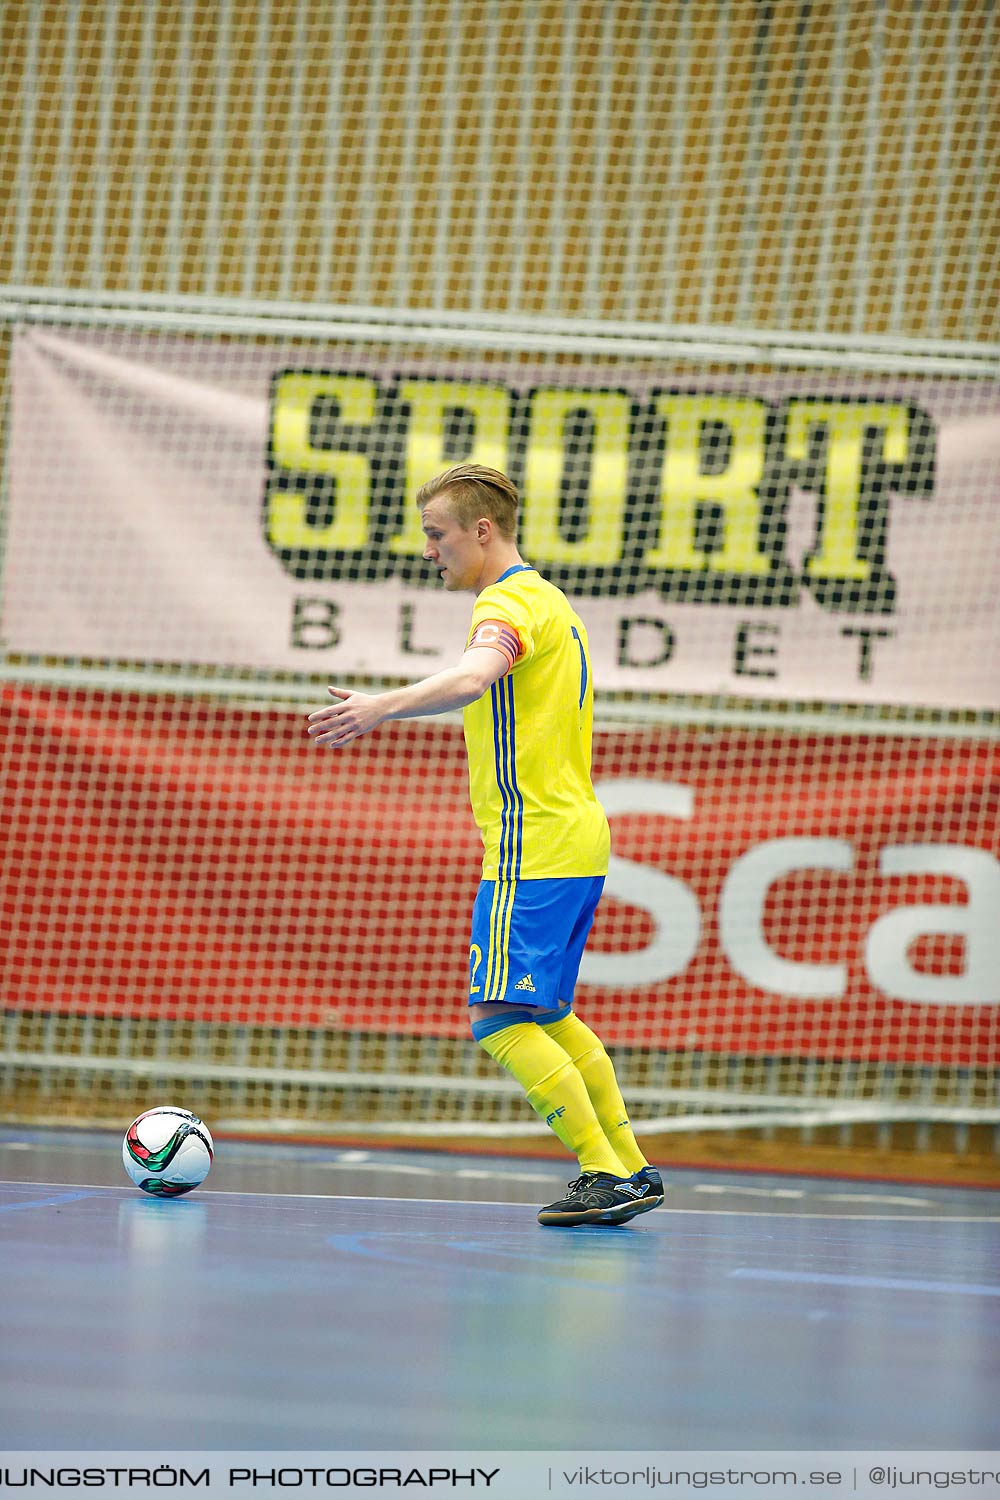 Landskamp Sverige-Finland 3-6,herr,Arena Skövde,Skövde,Sverige,Futsal,,2016,176911